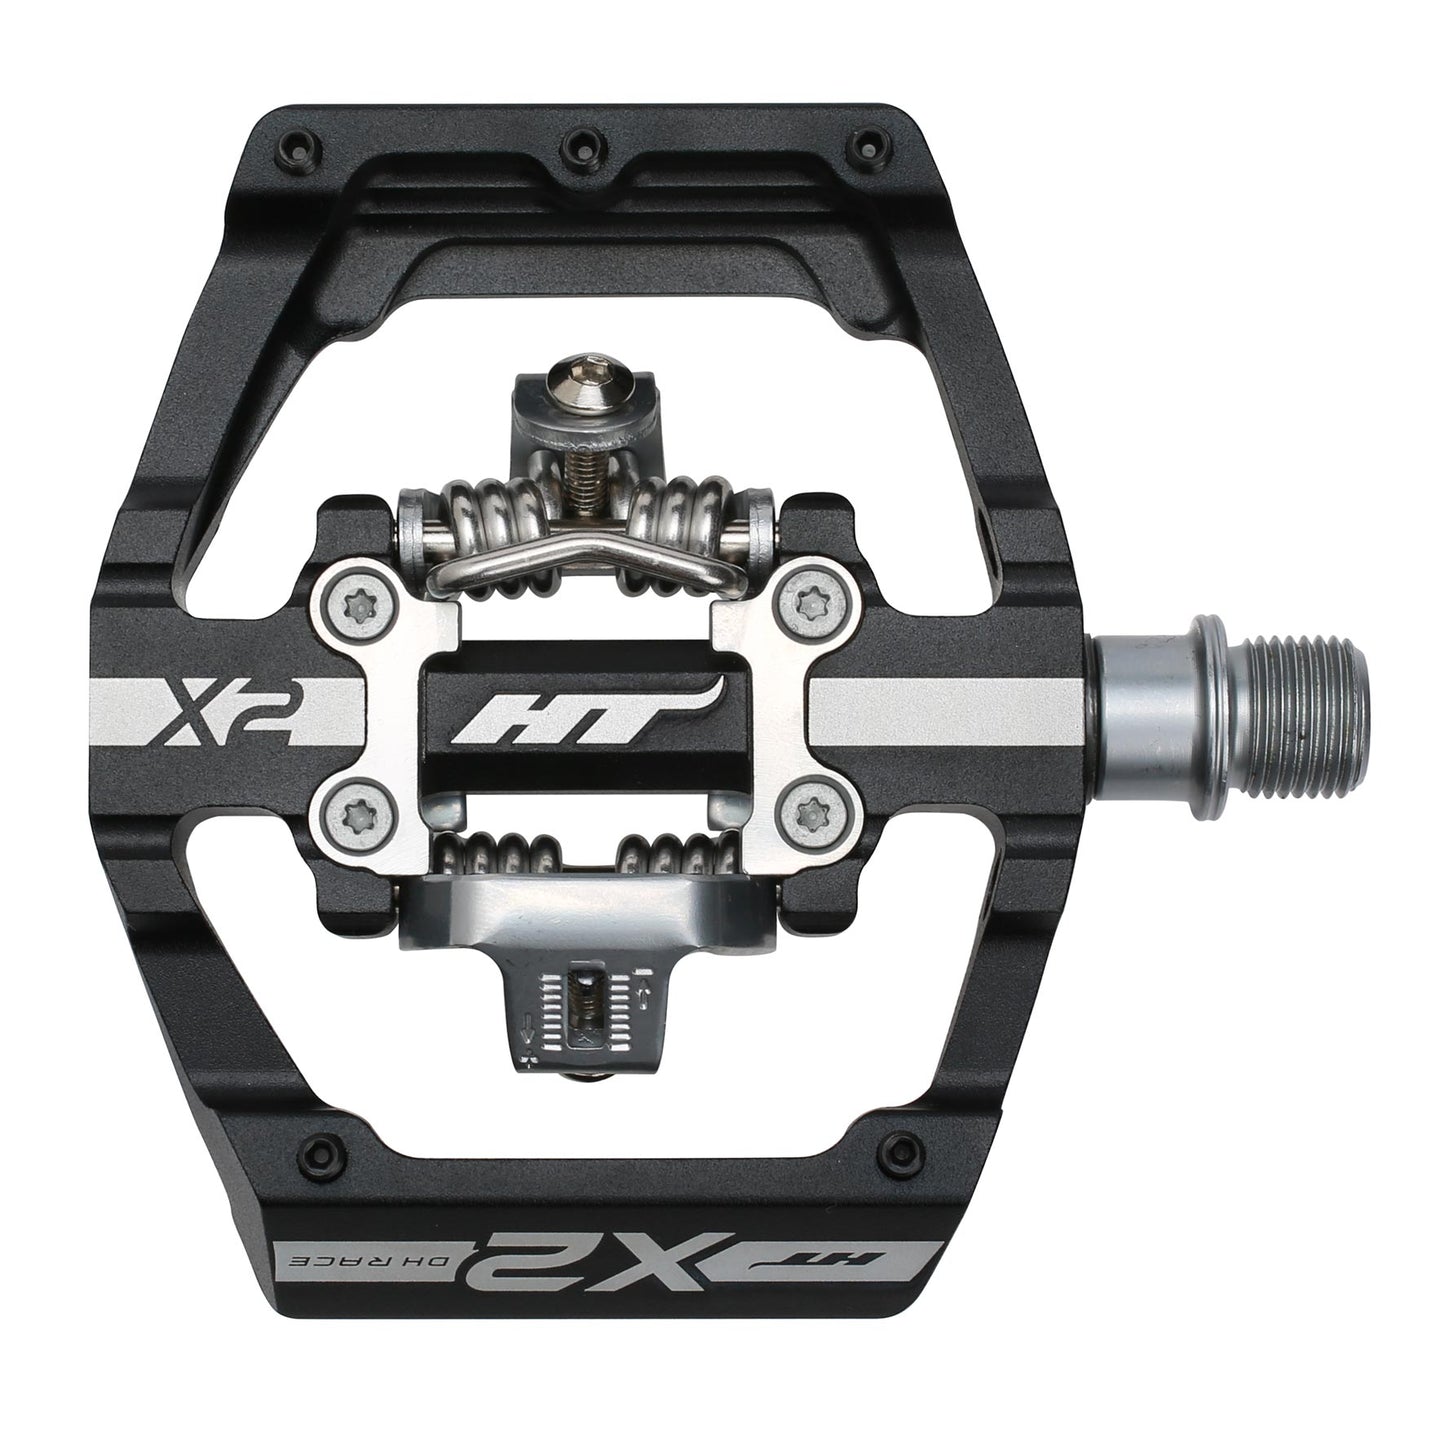 Ht X2 Pedals Alloy / CNC CRMO - Black